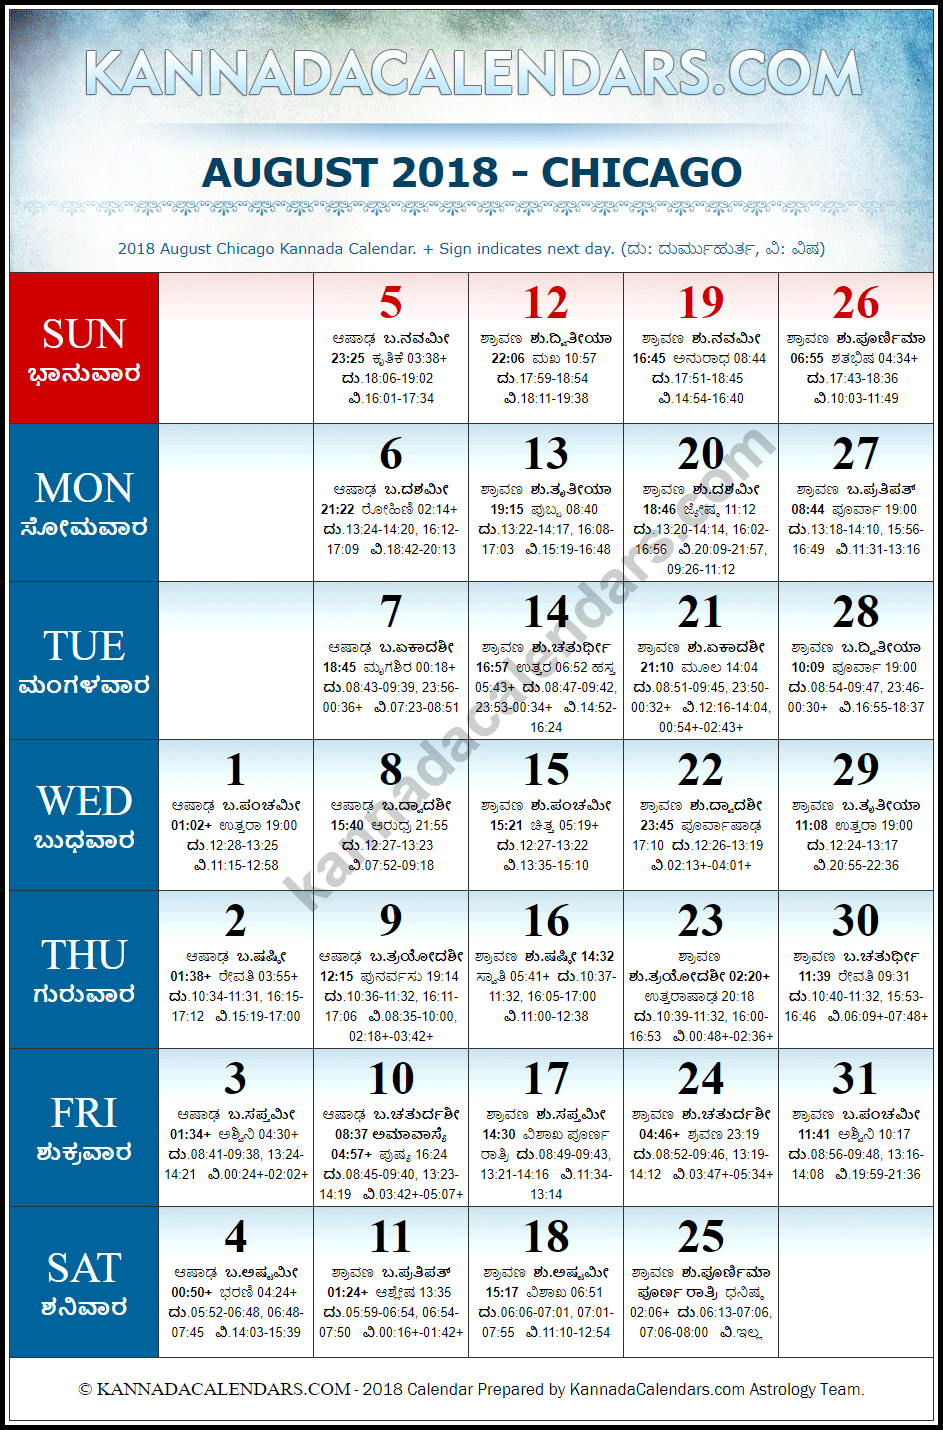 August 2018 Kannada Calendar for Chicago, USA